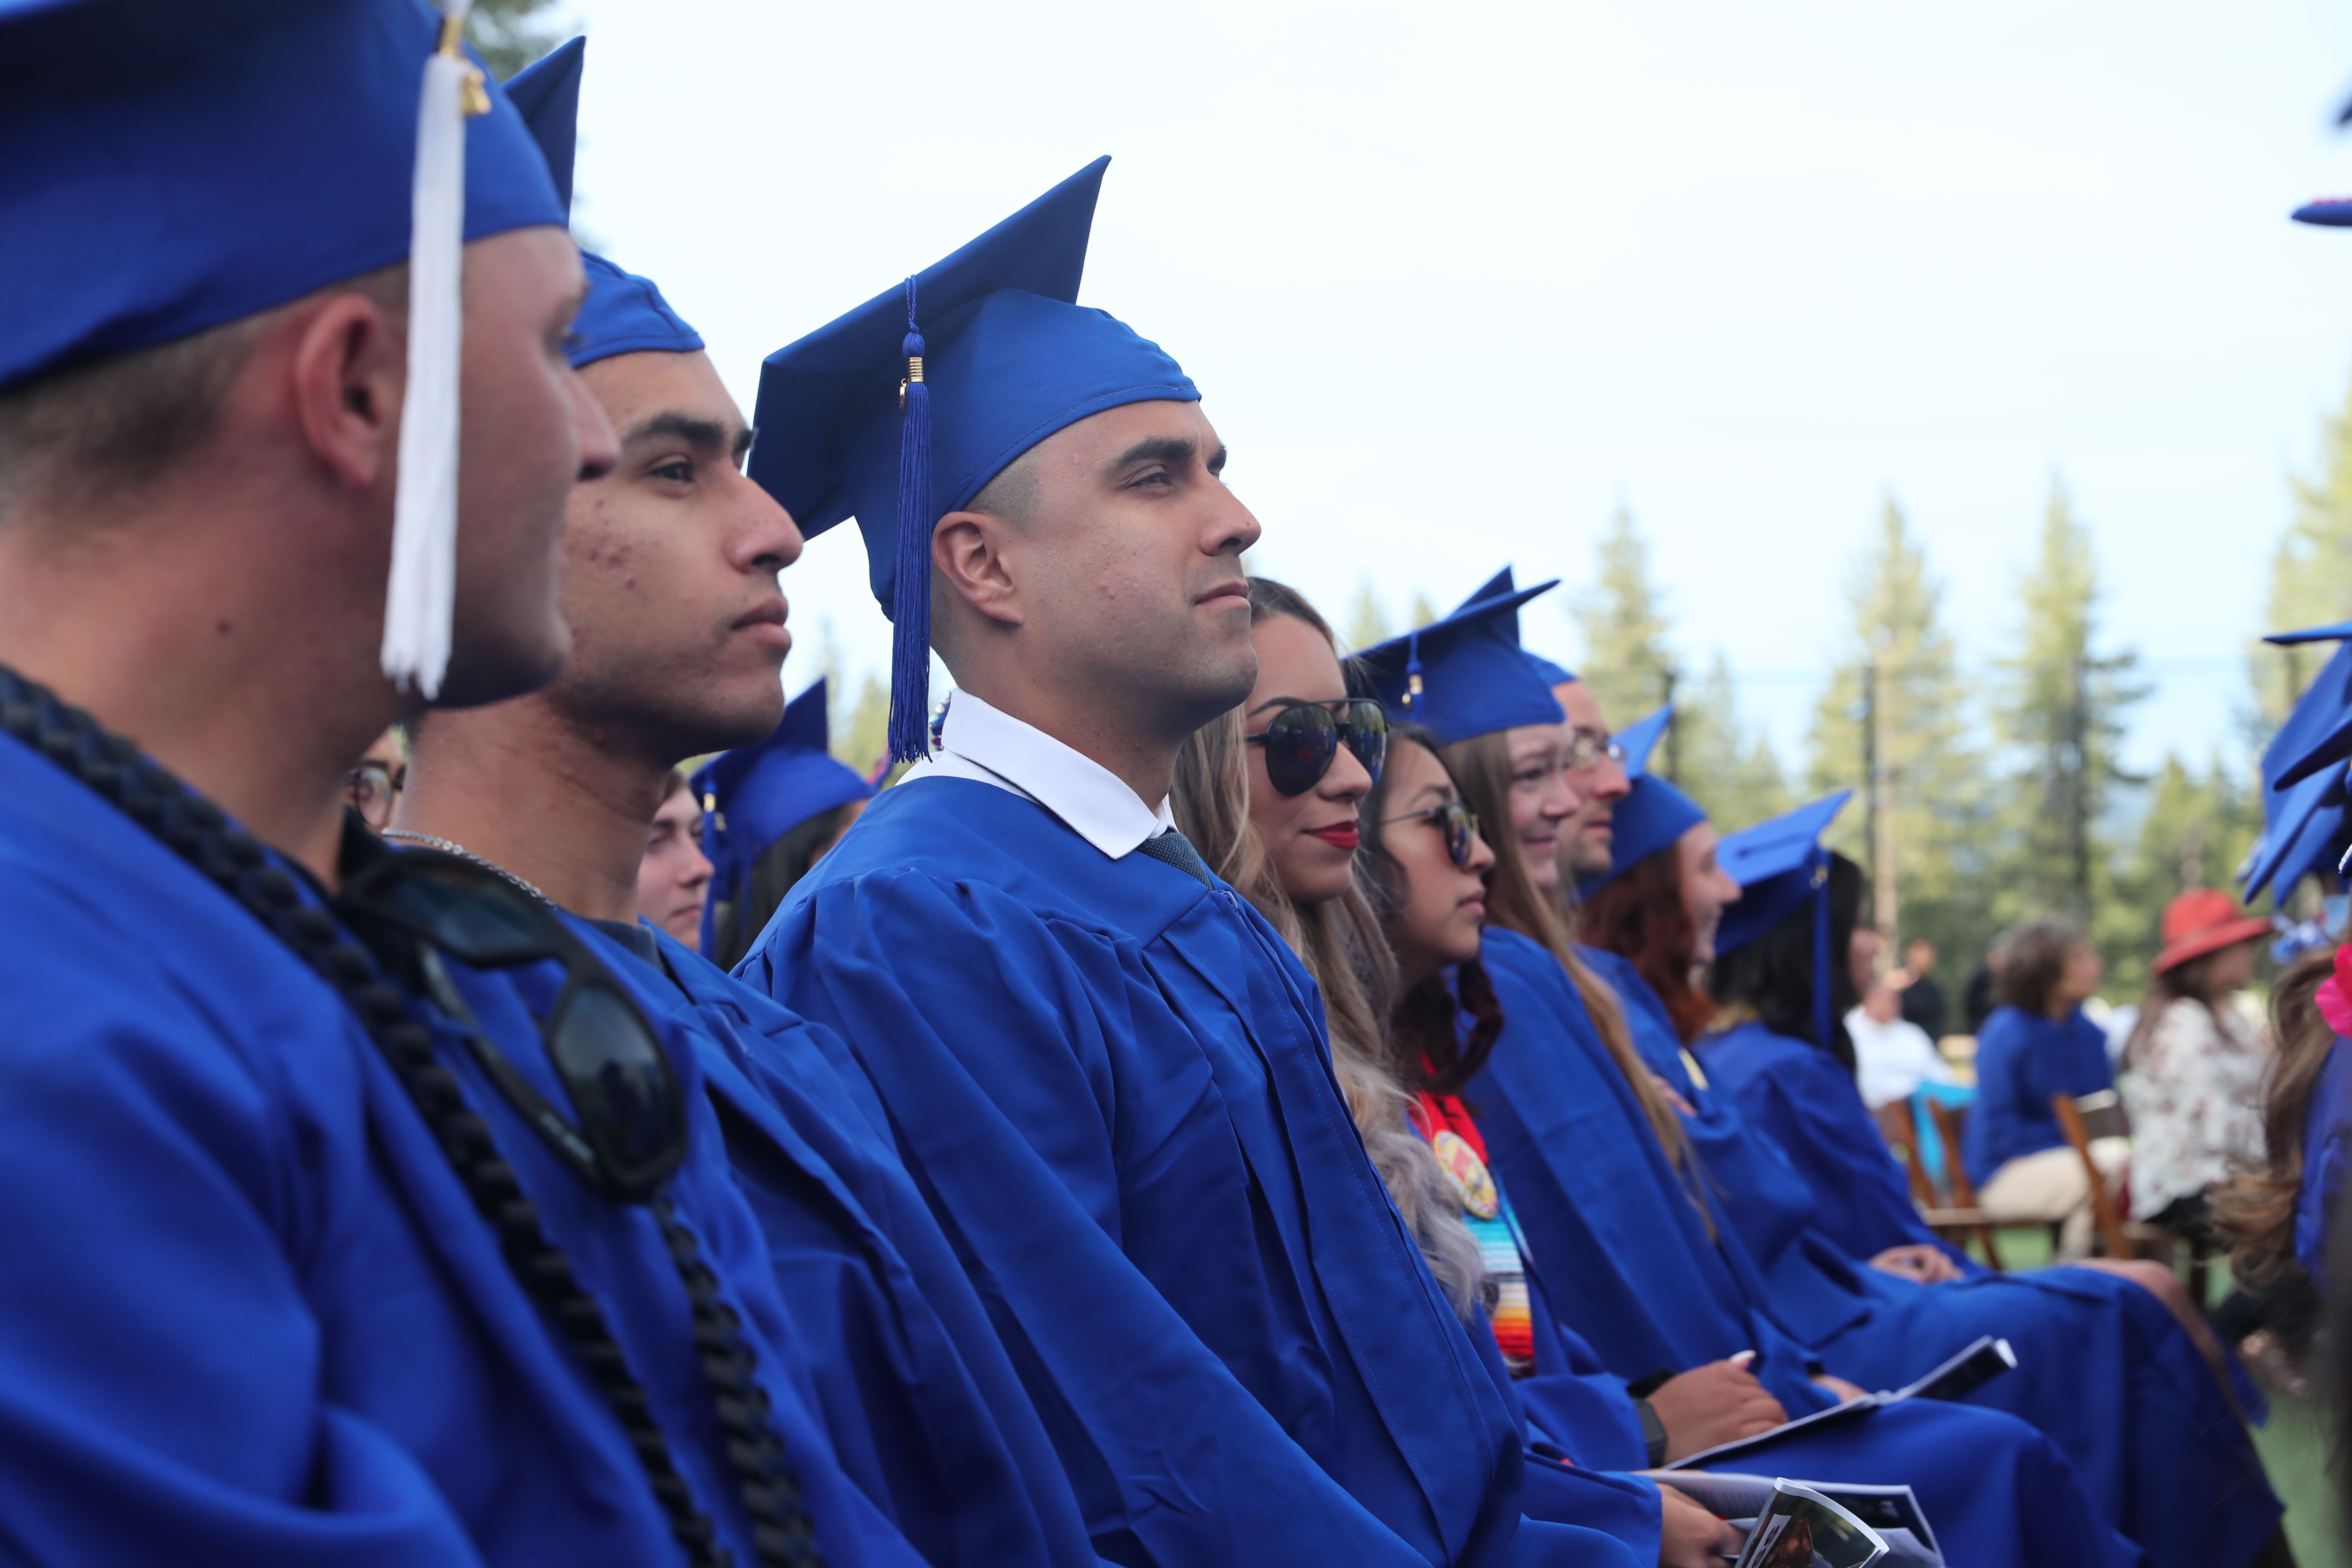 Graduates sitting